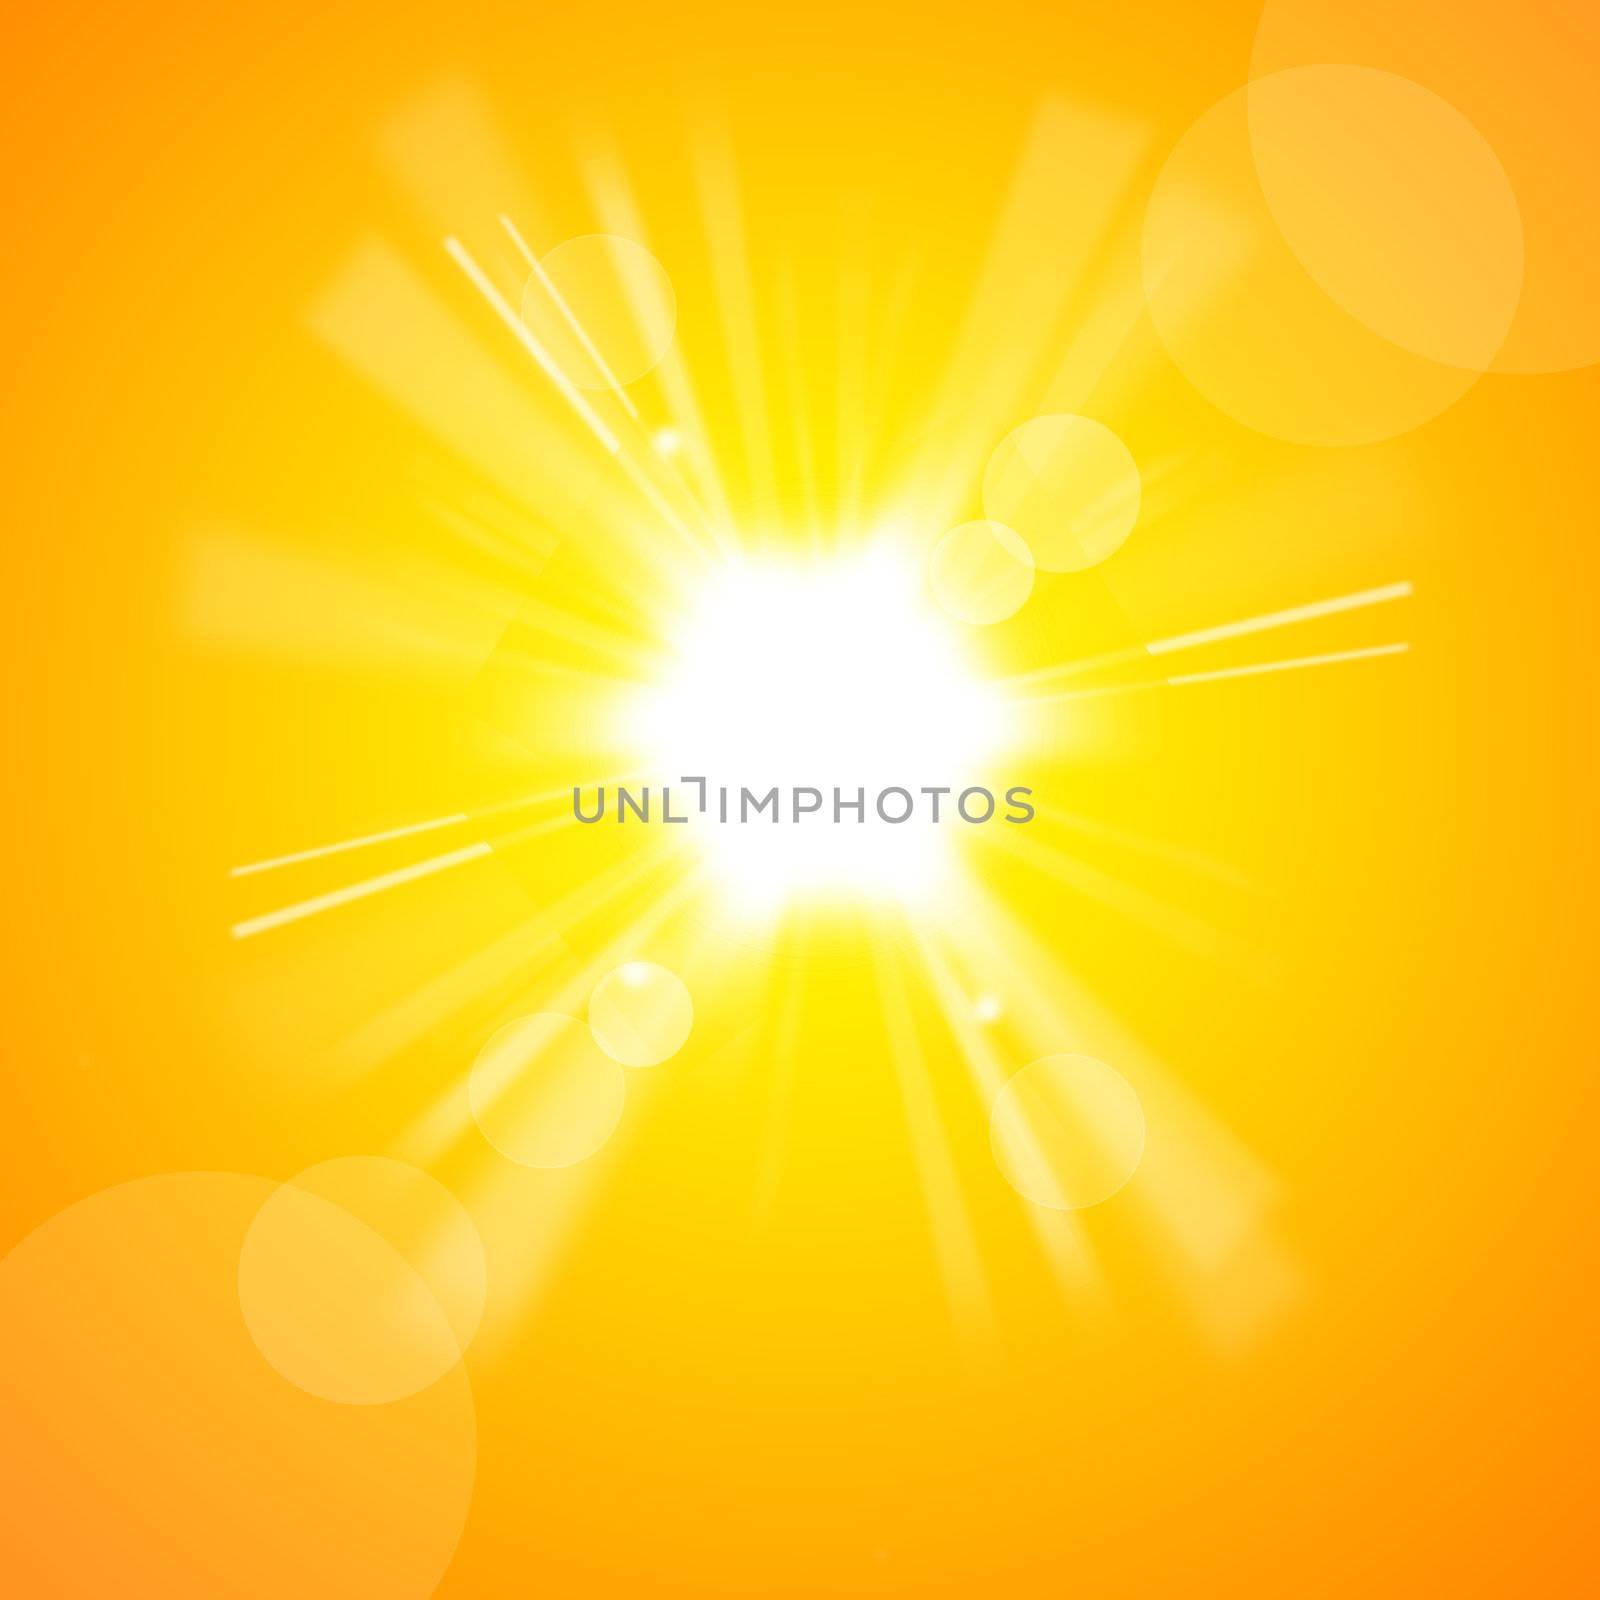 The bright yellow sun by petrkurgan